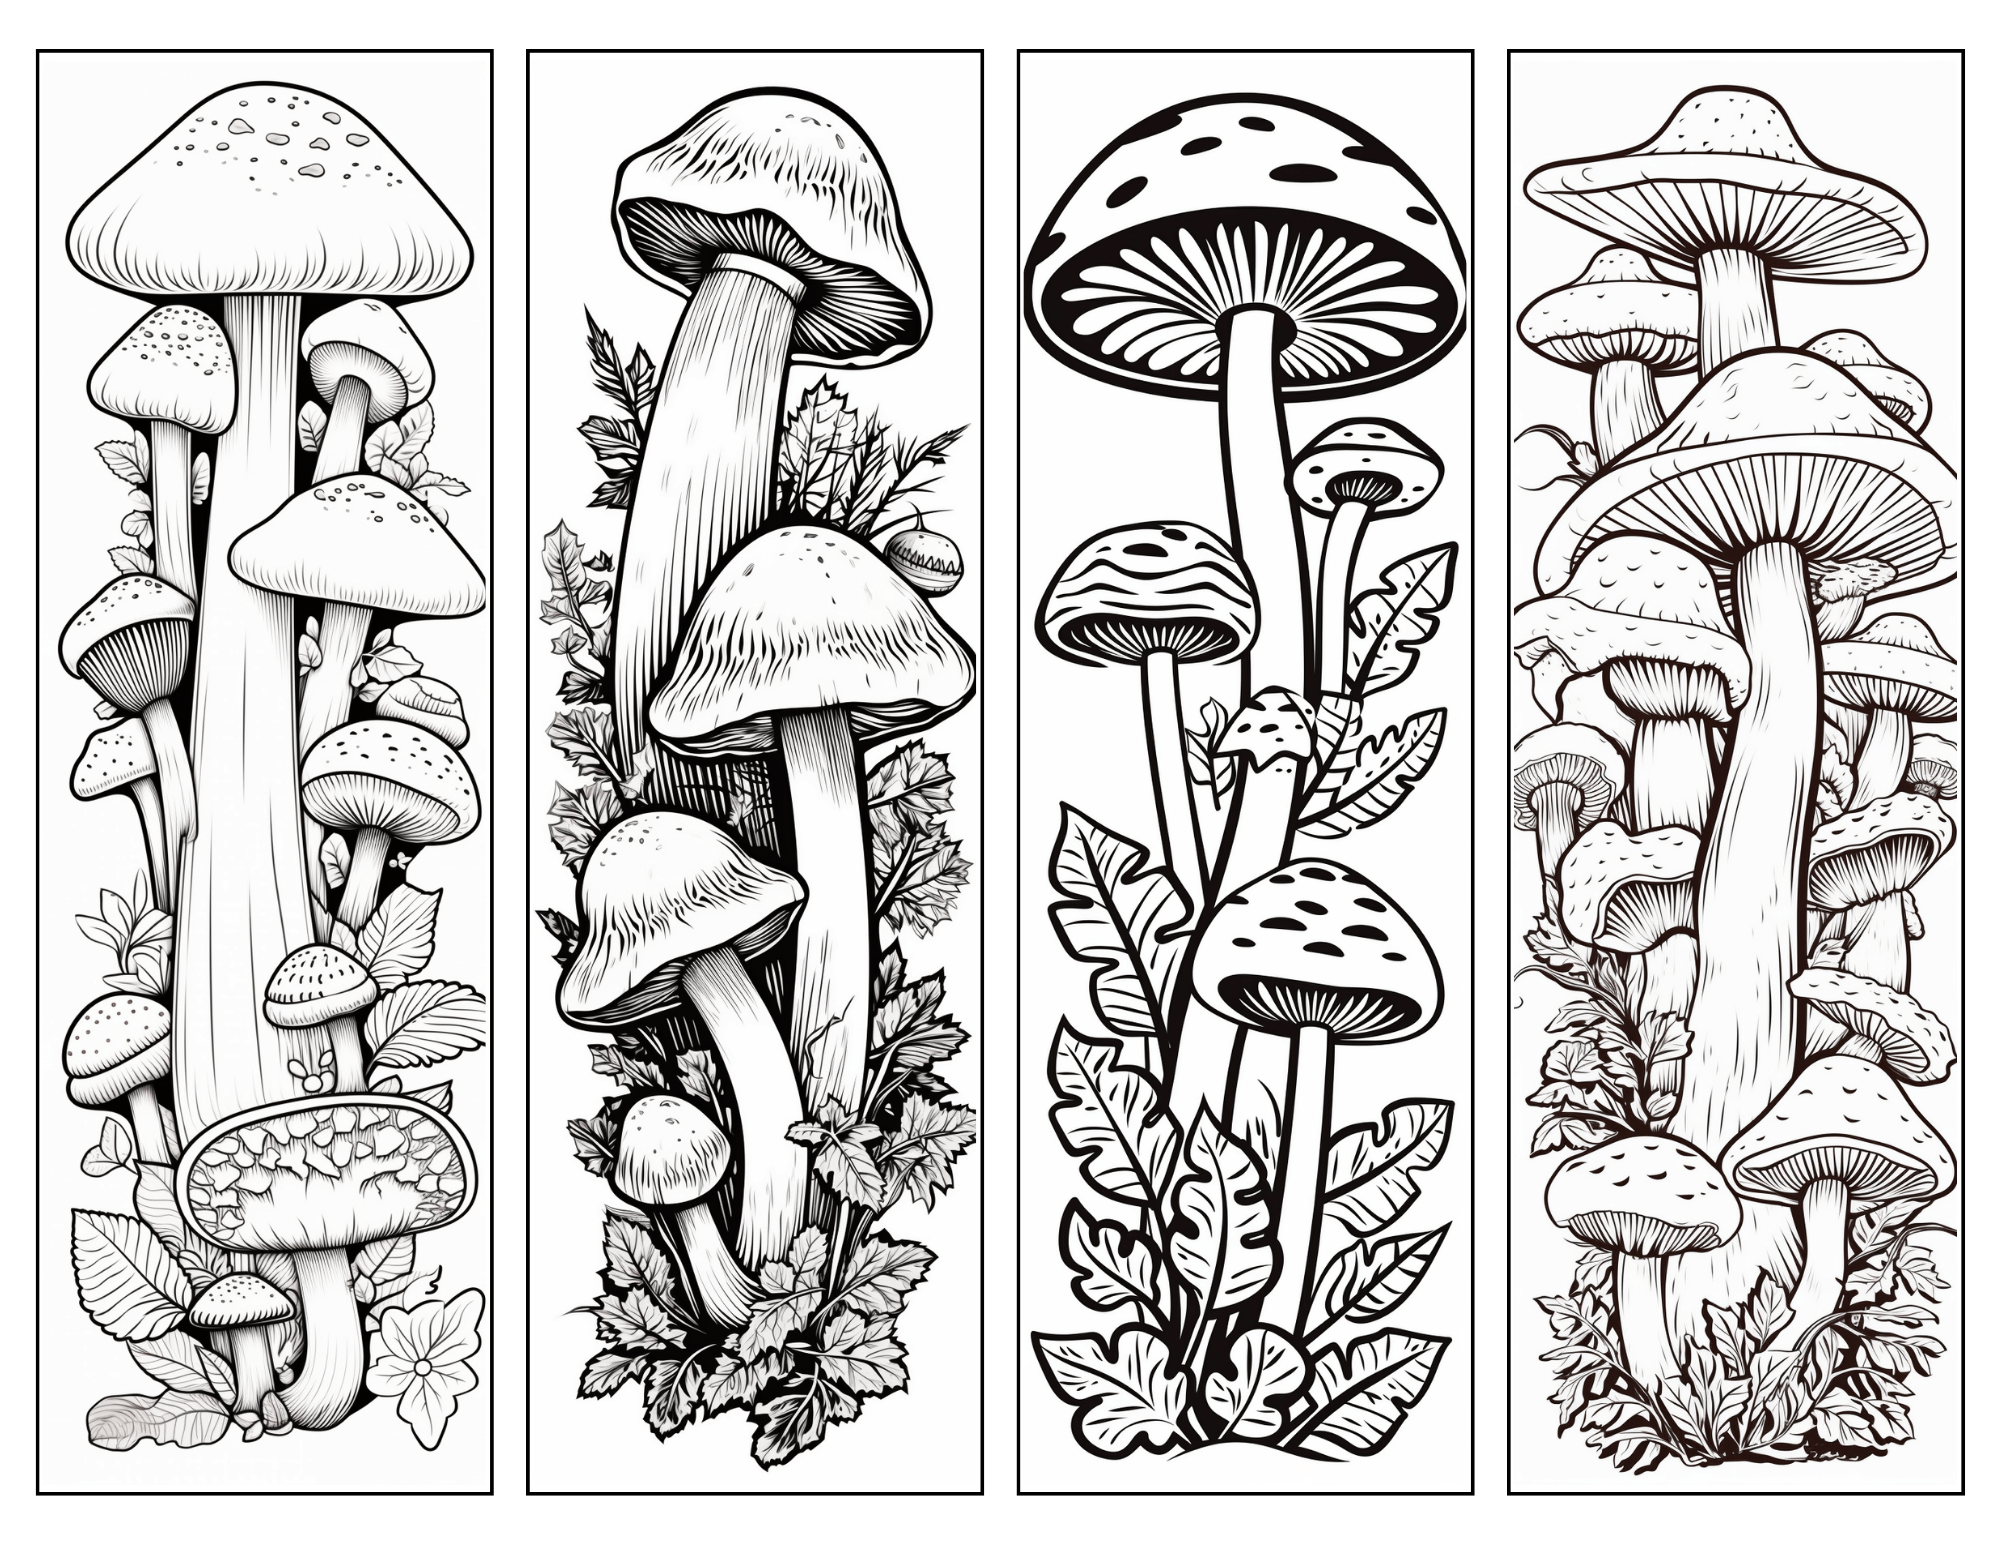 Mushroom bookmark print magic art bookmarks on paper skip to my lou